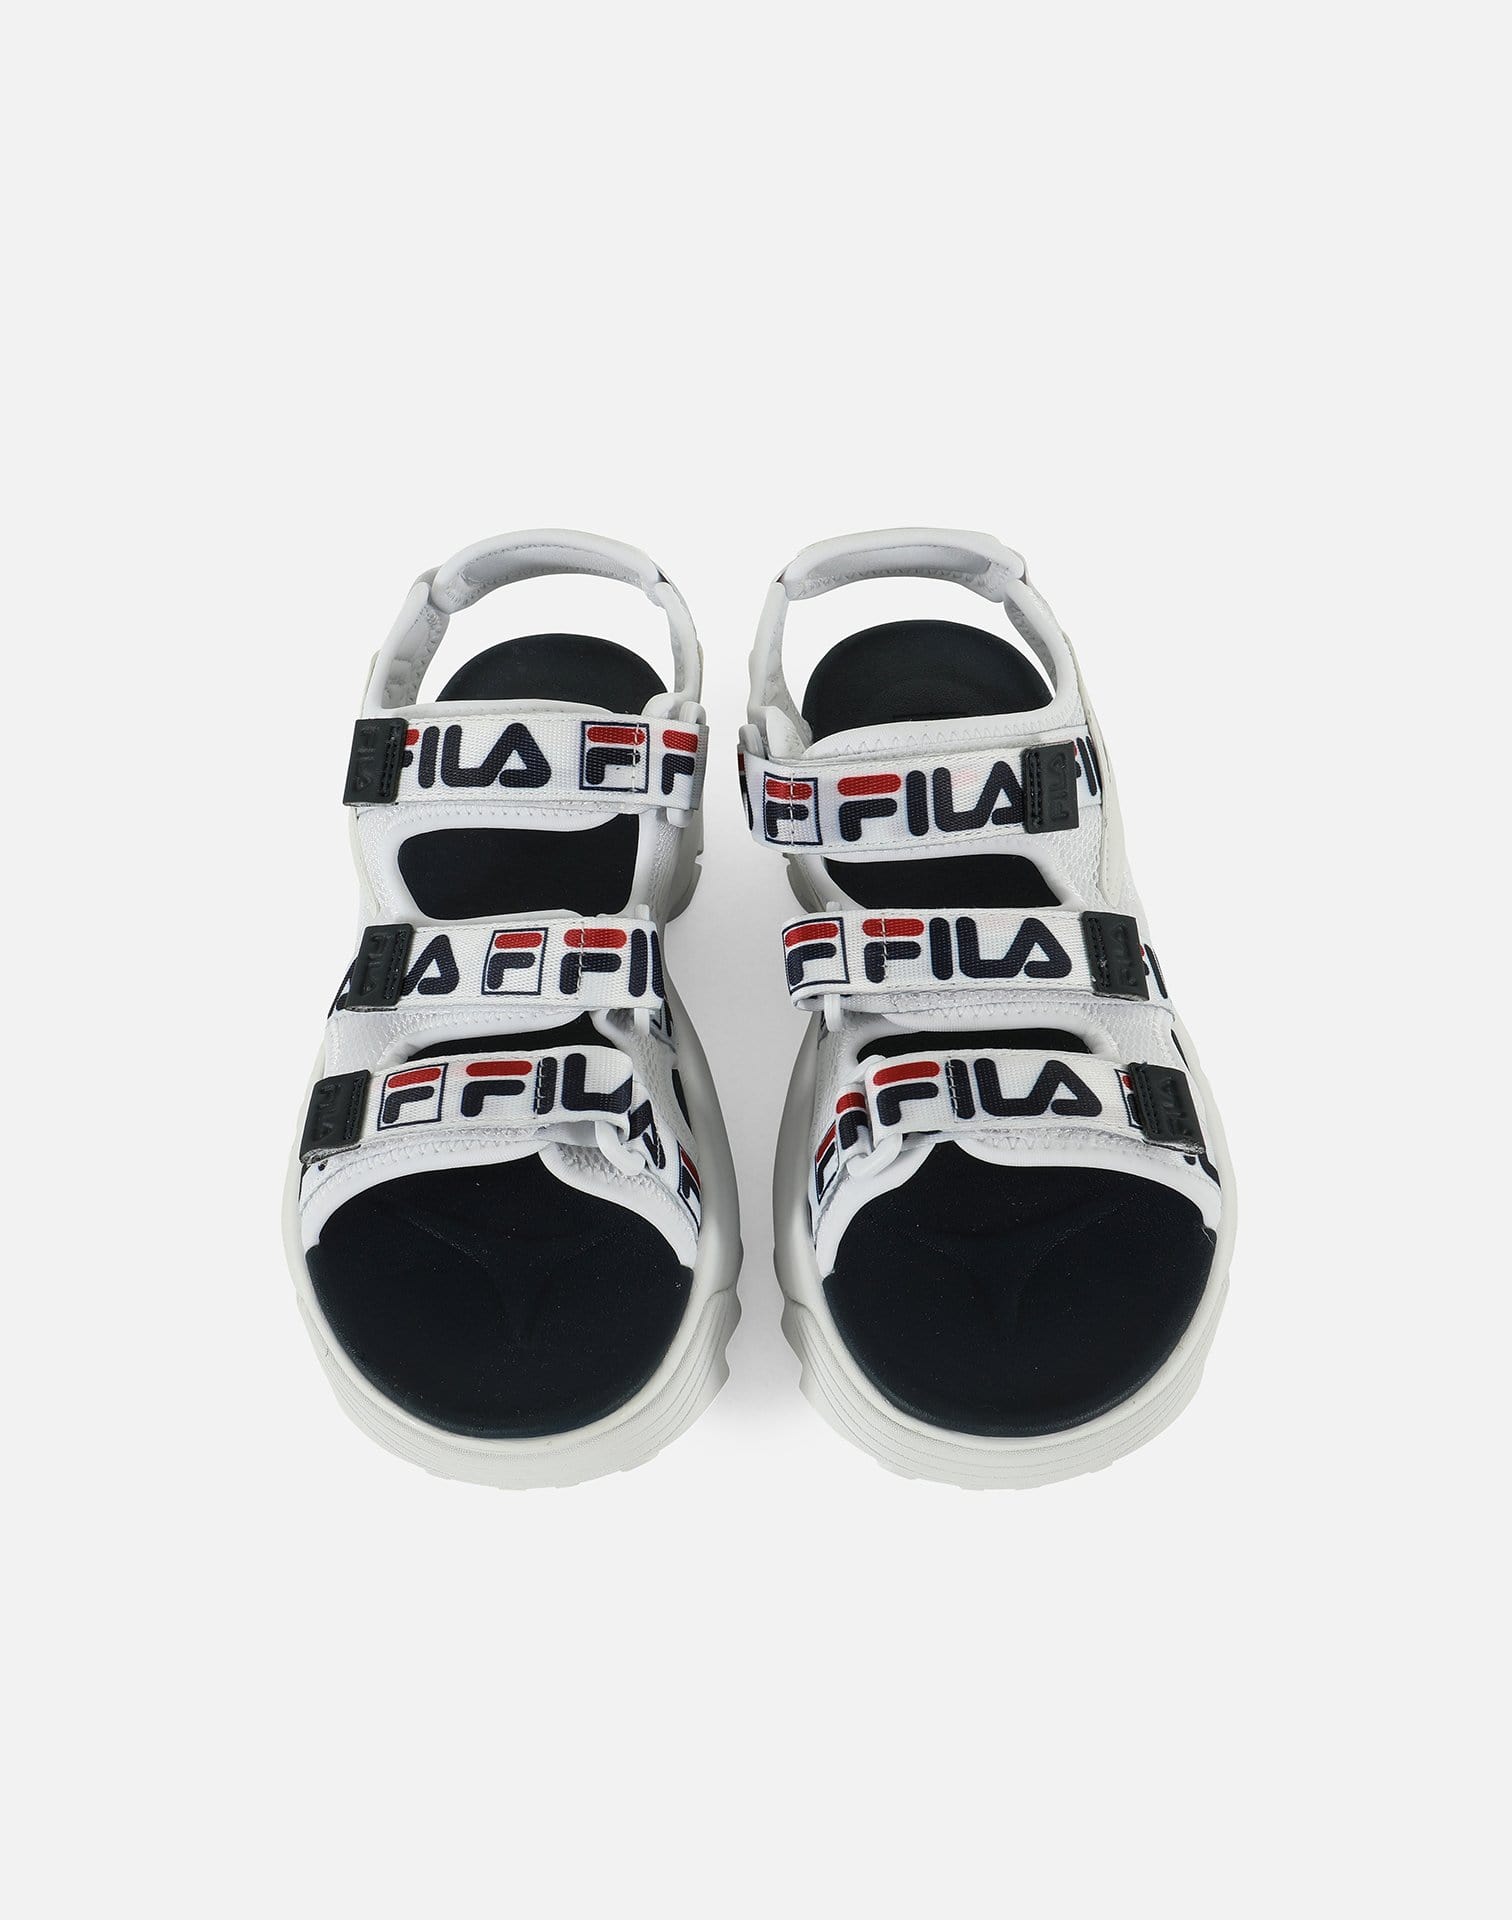 FILA Women's Disruptor Sandals